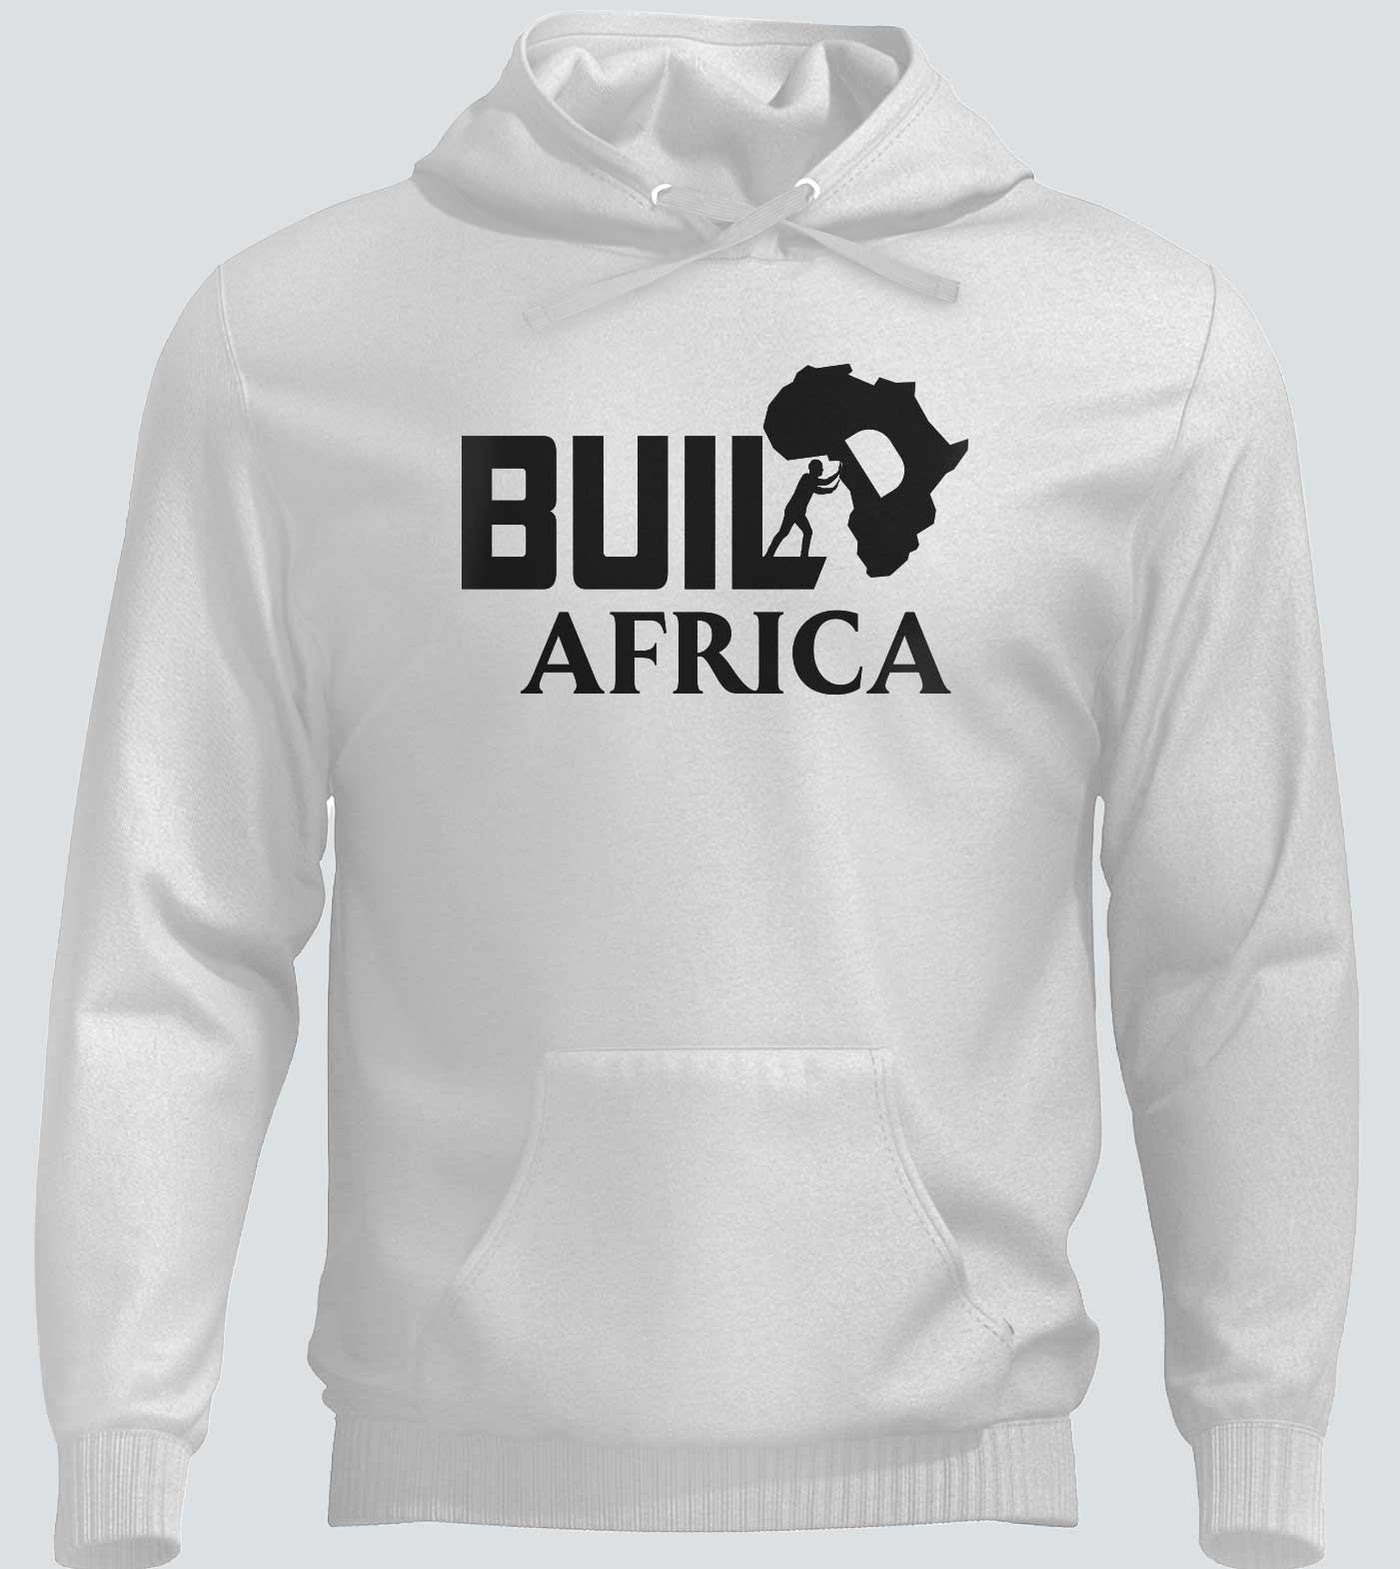 Build Africa 2 Hoodies